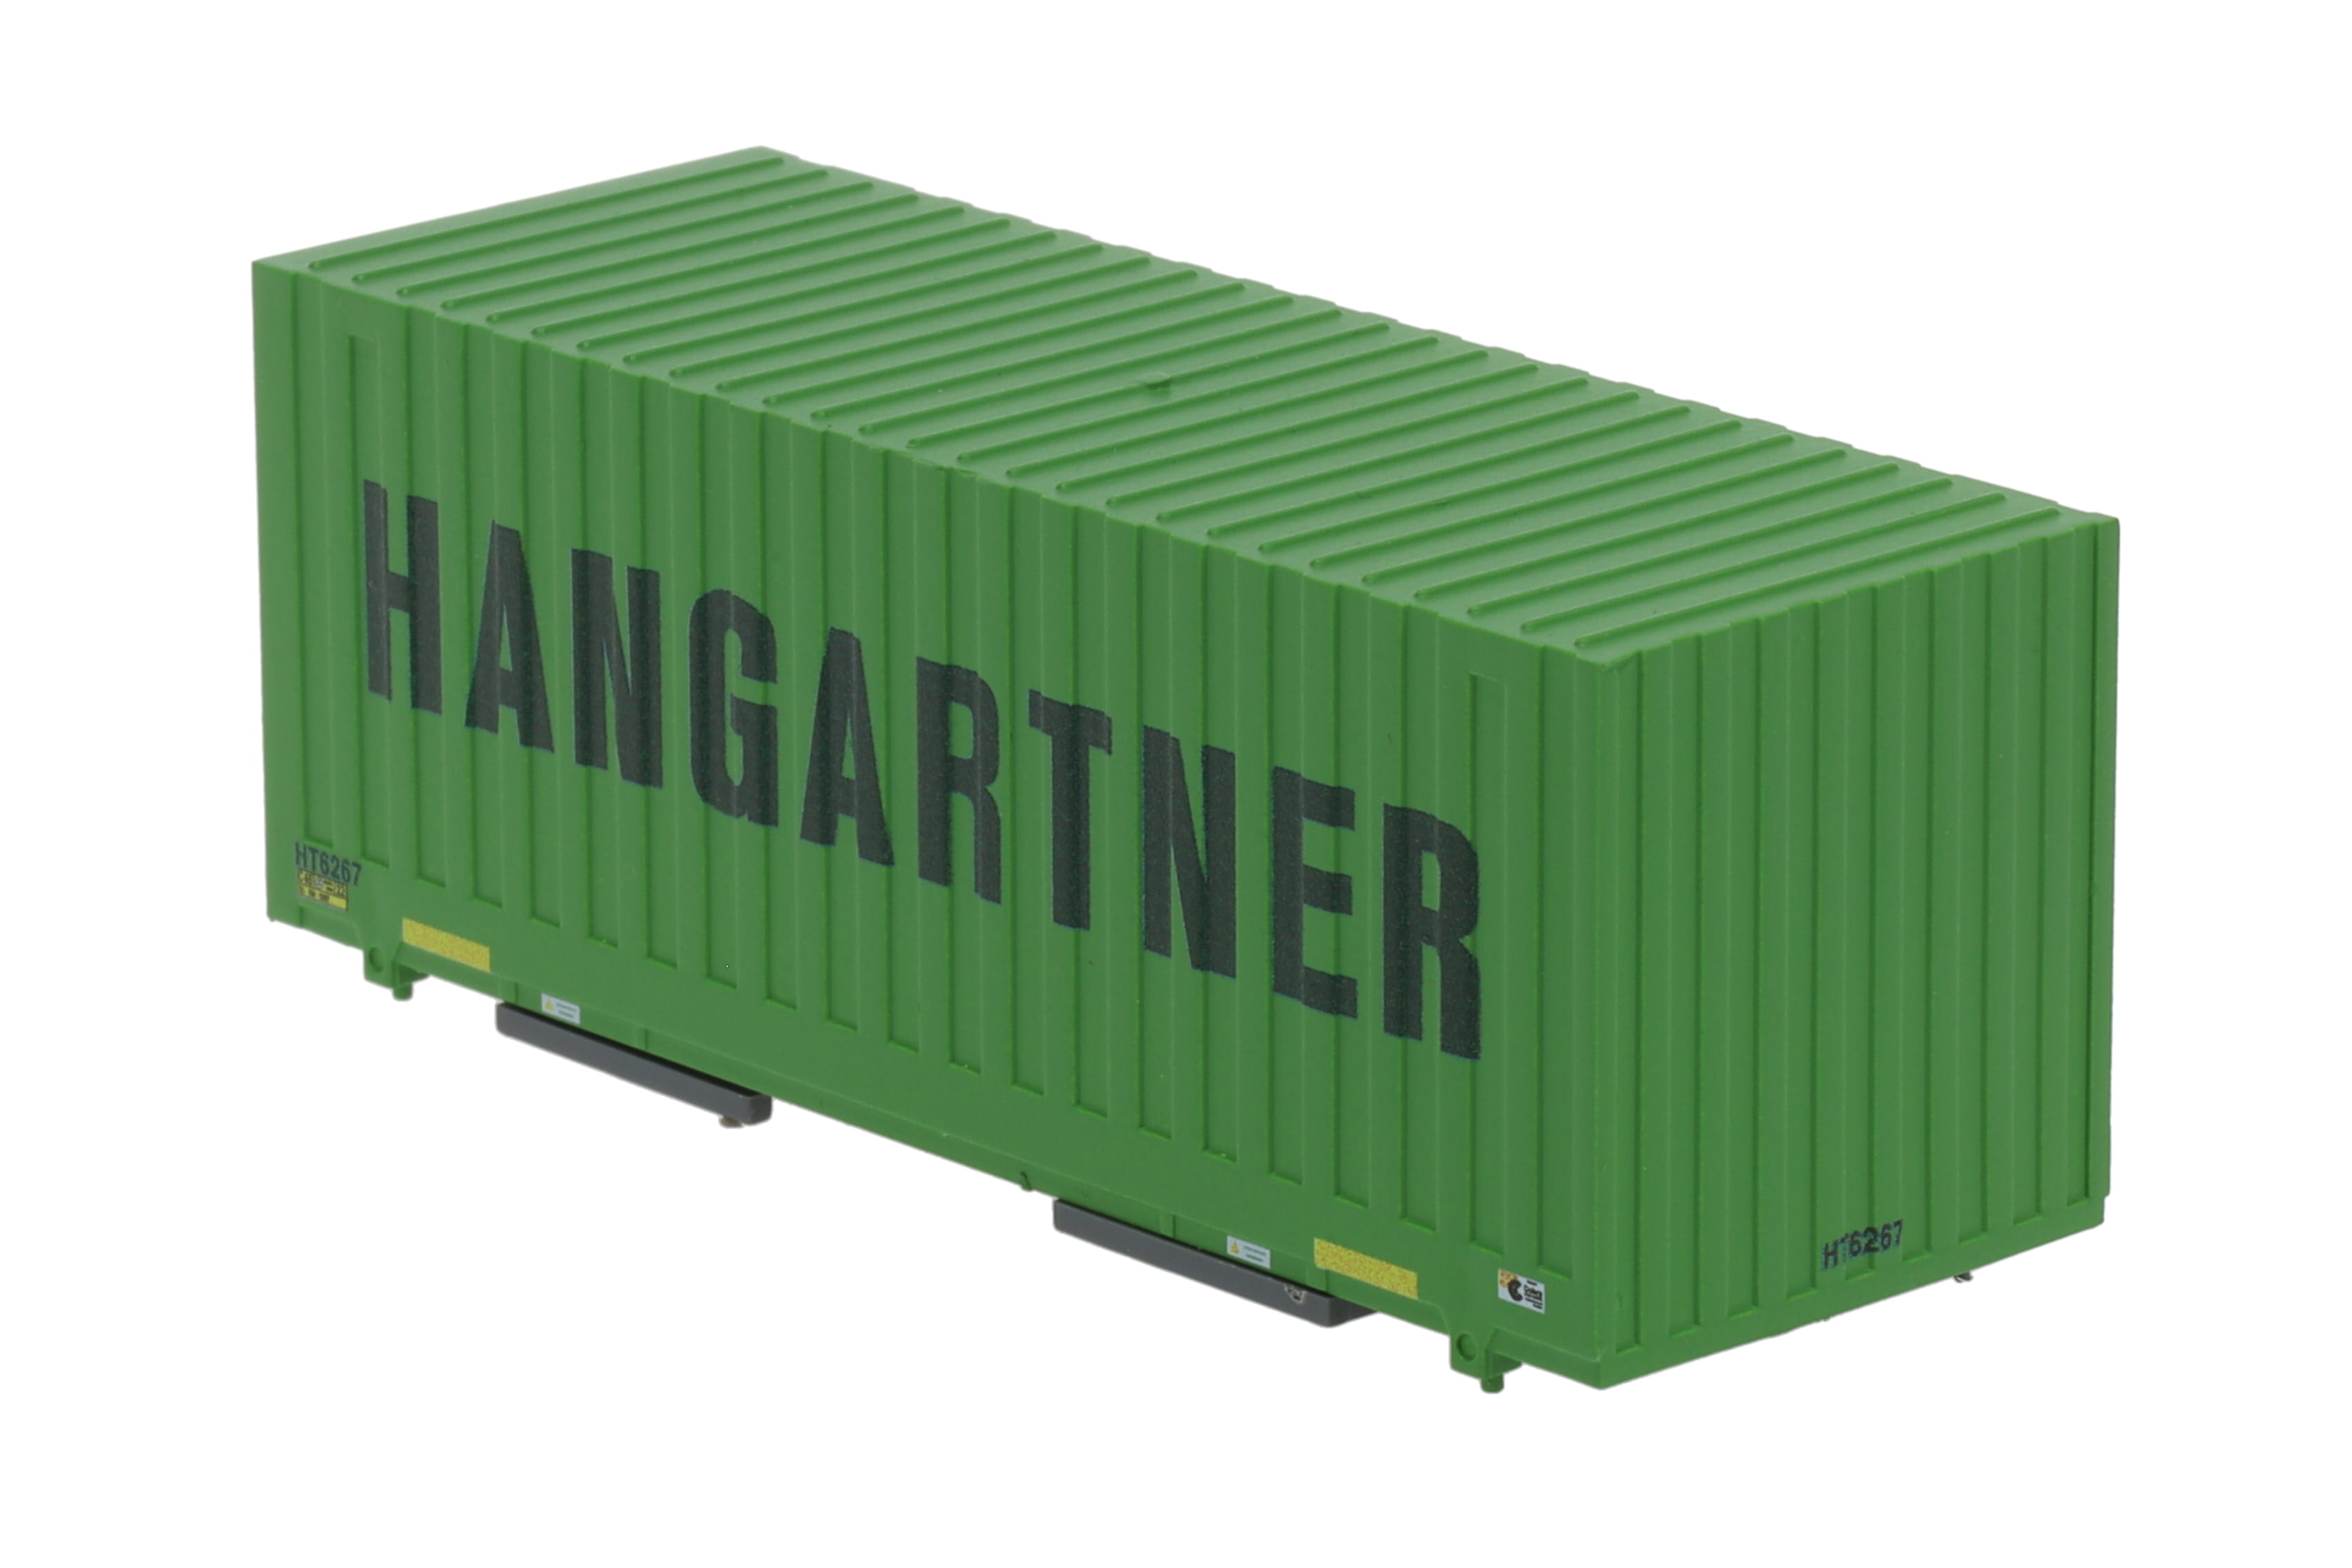 1:87 Container WB-C715 HANGAR Wechselbehälter WB-C 715 Cobra Spu-Wa Box, Aufschrift: HANGARTNER, Behälter-Nr: HT 6267